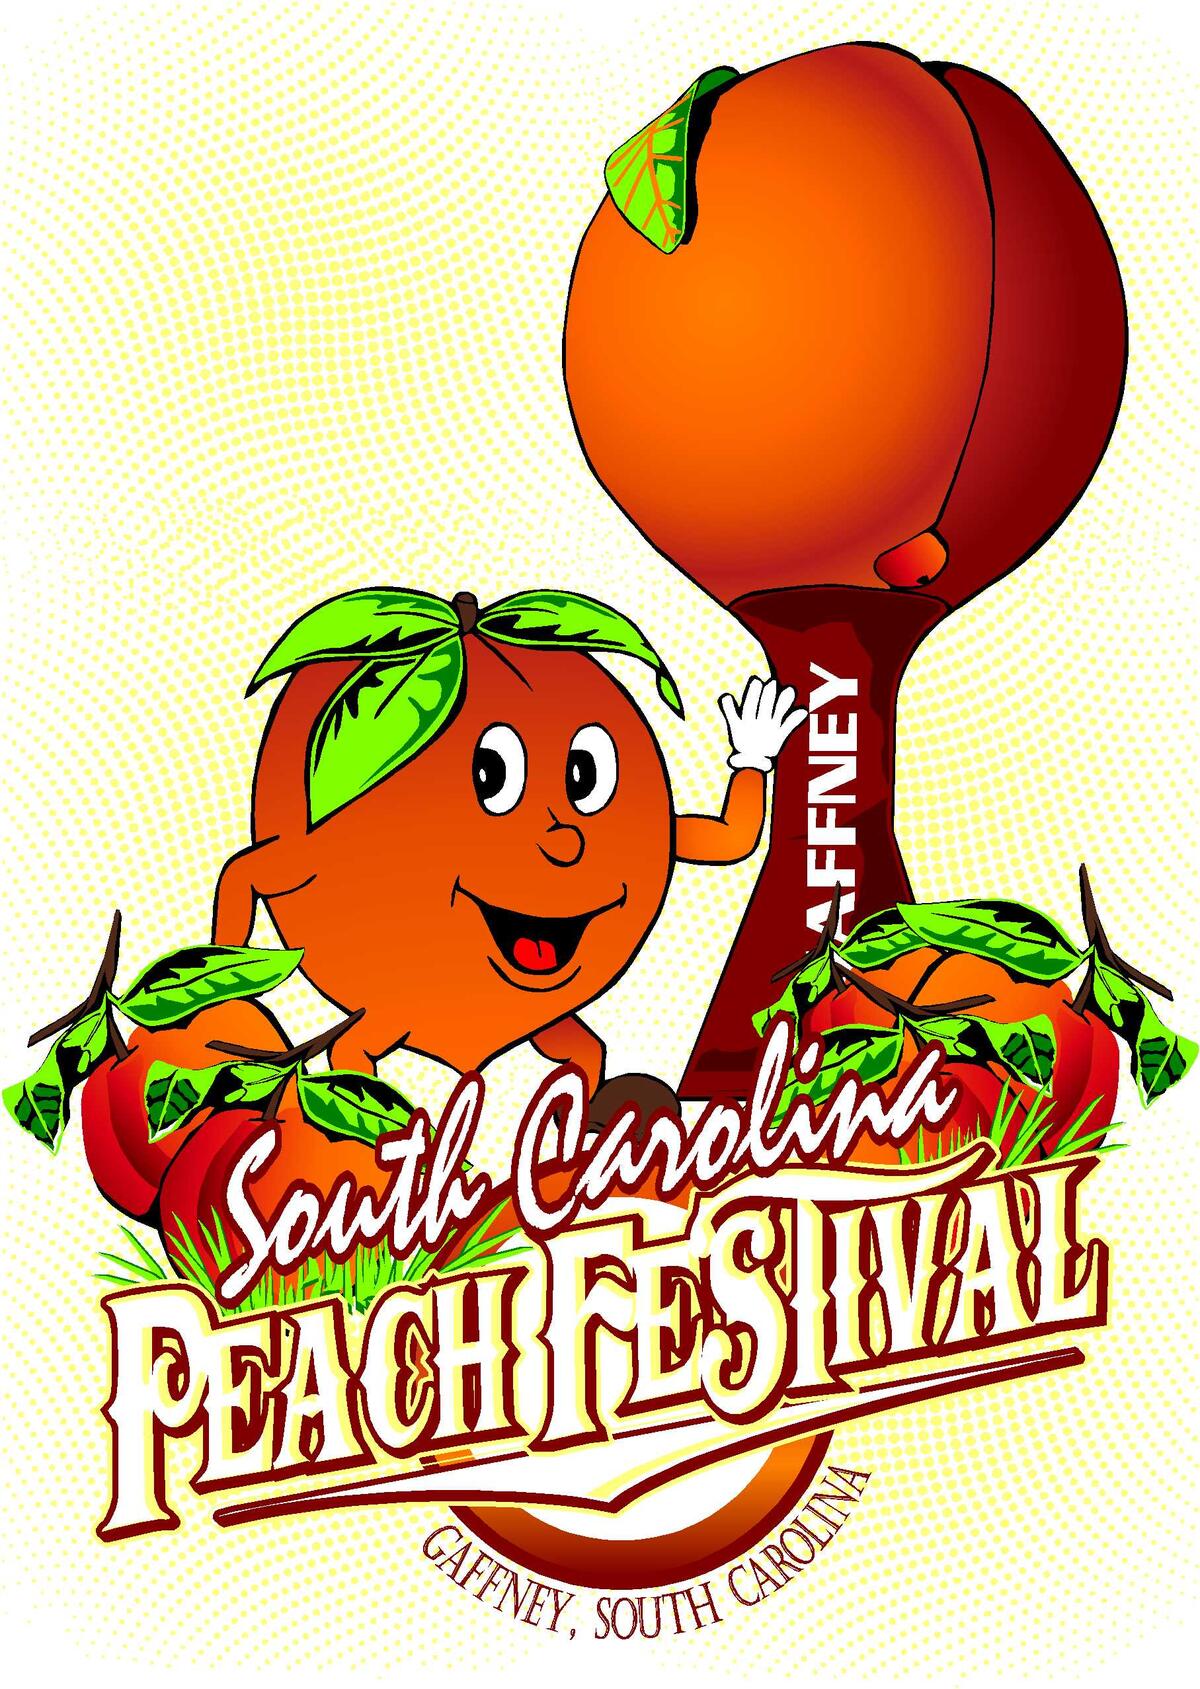 S.C. Peach Festival Events To Call Limestone Home Limestone University